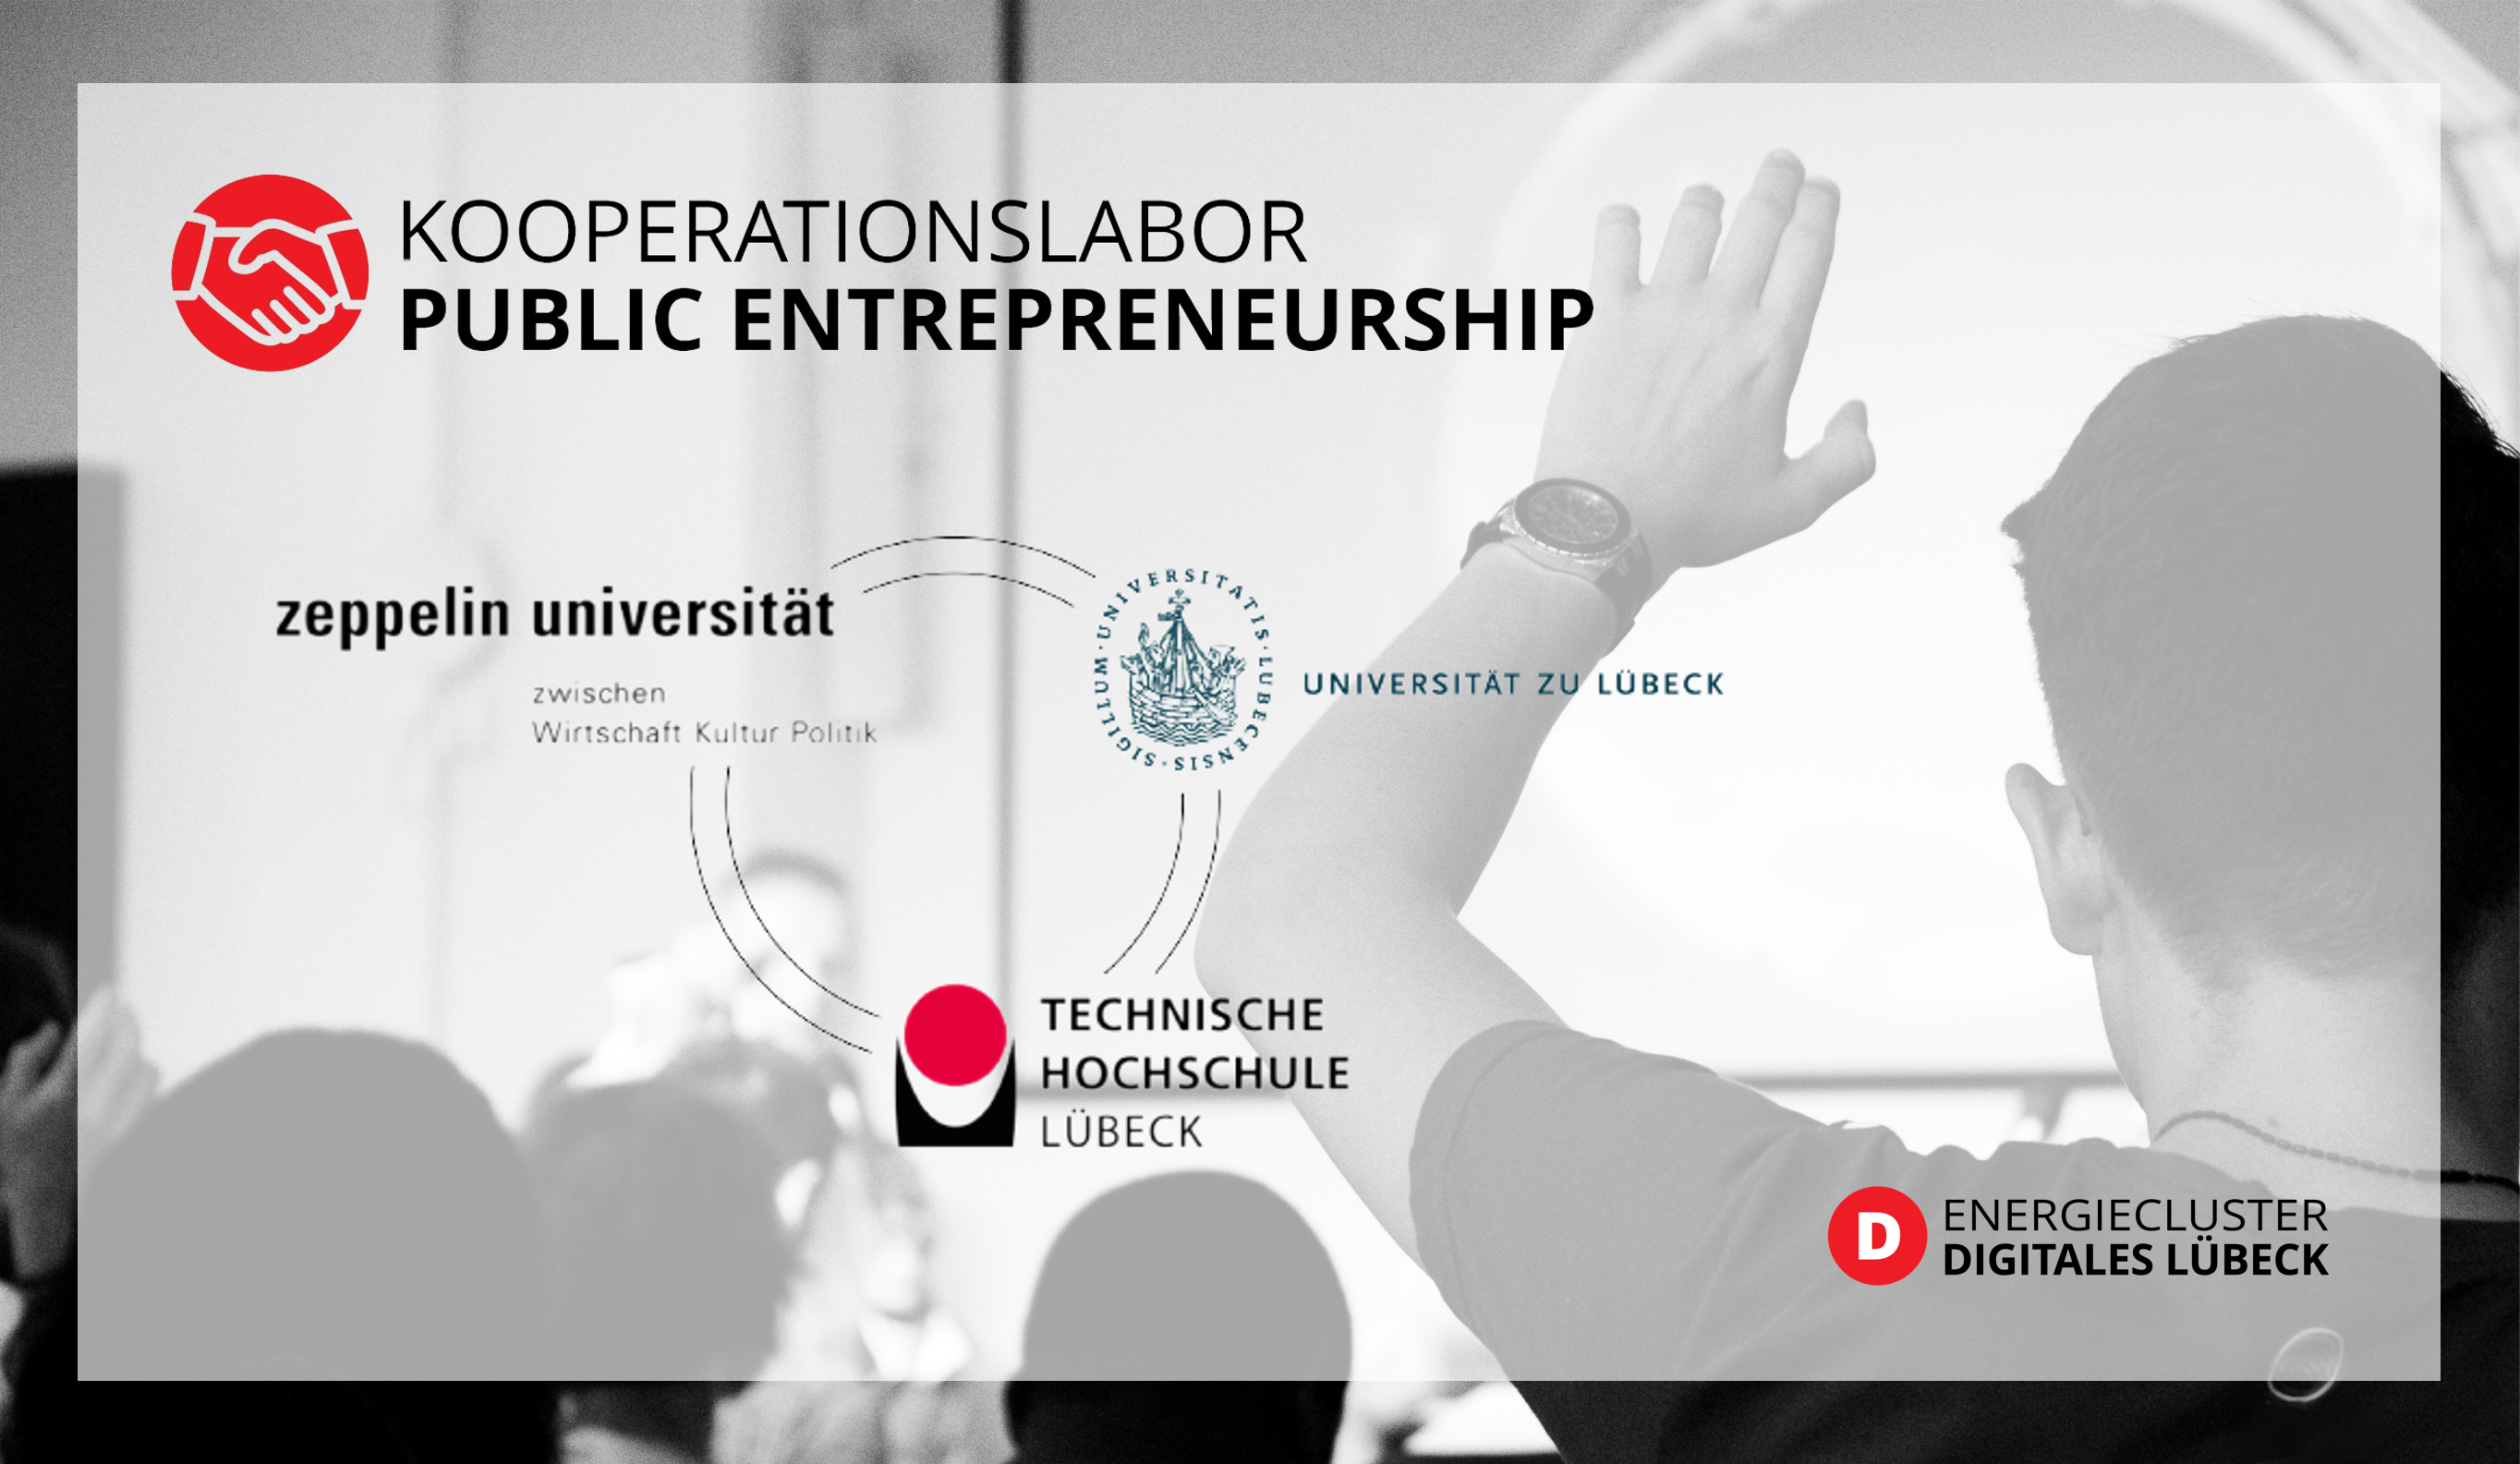 KoopSeminar Public Entrepreneurship ECDHL